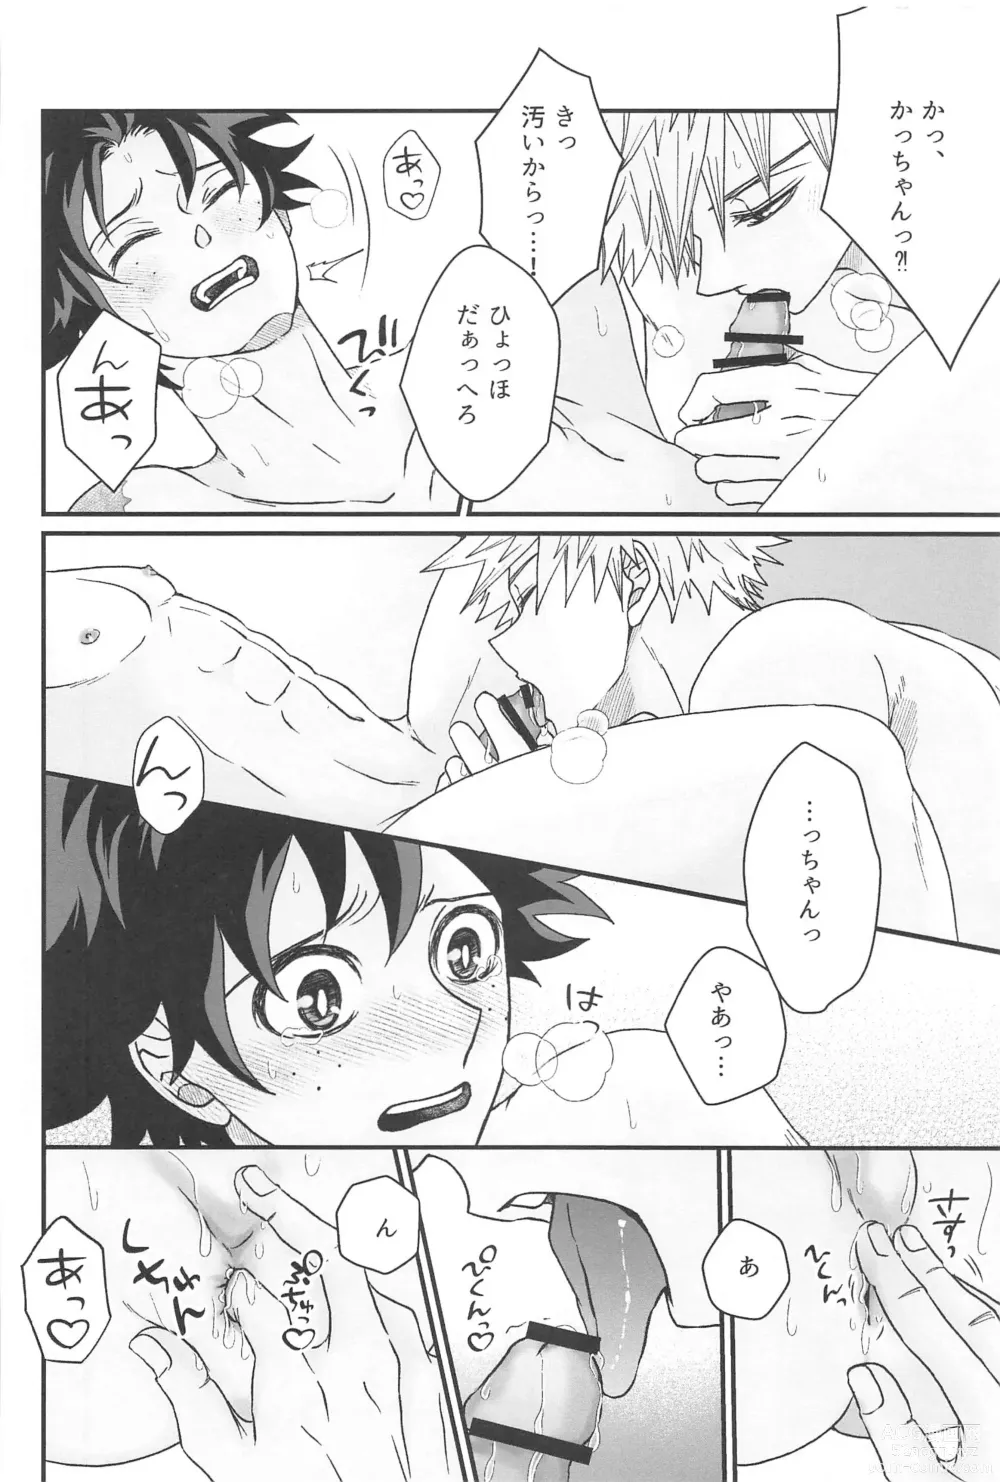 Page 25 of doujinshi 0.01